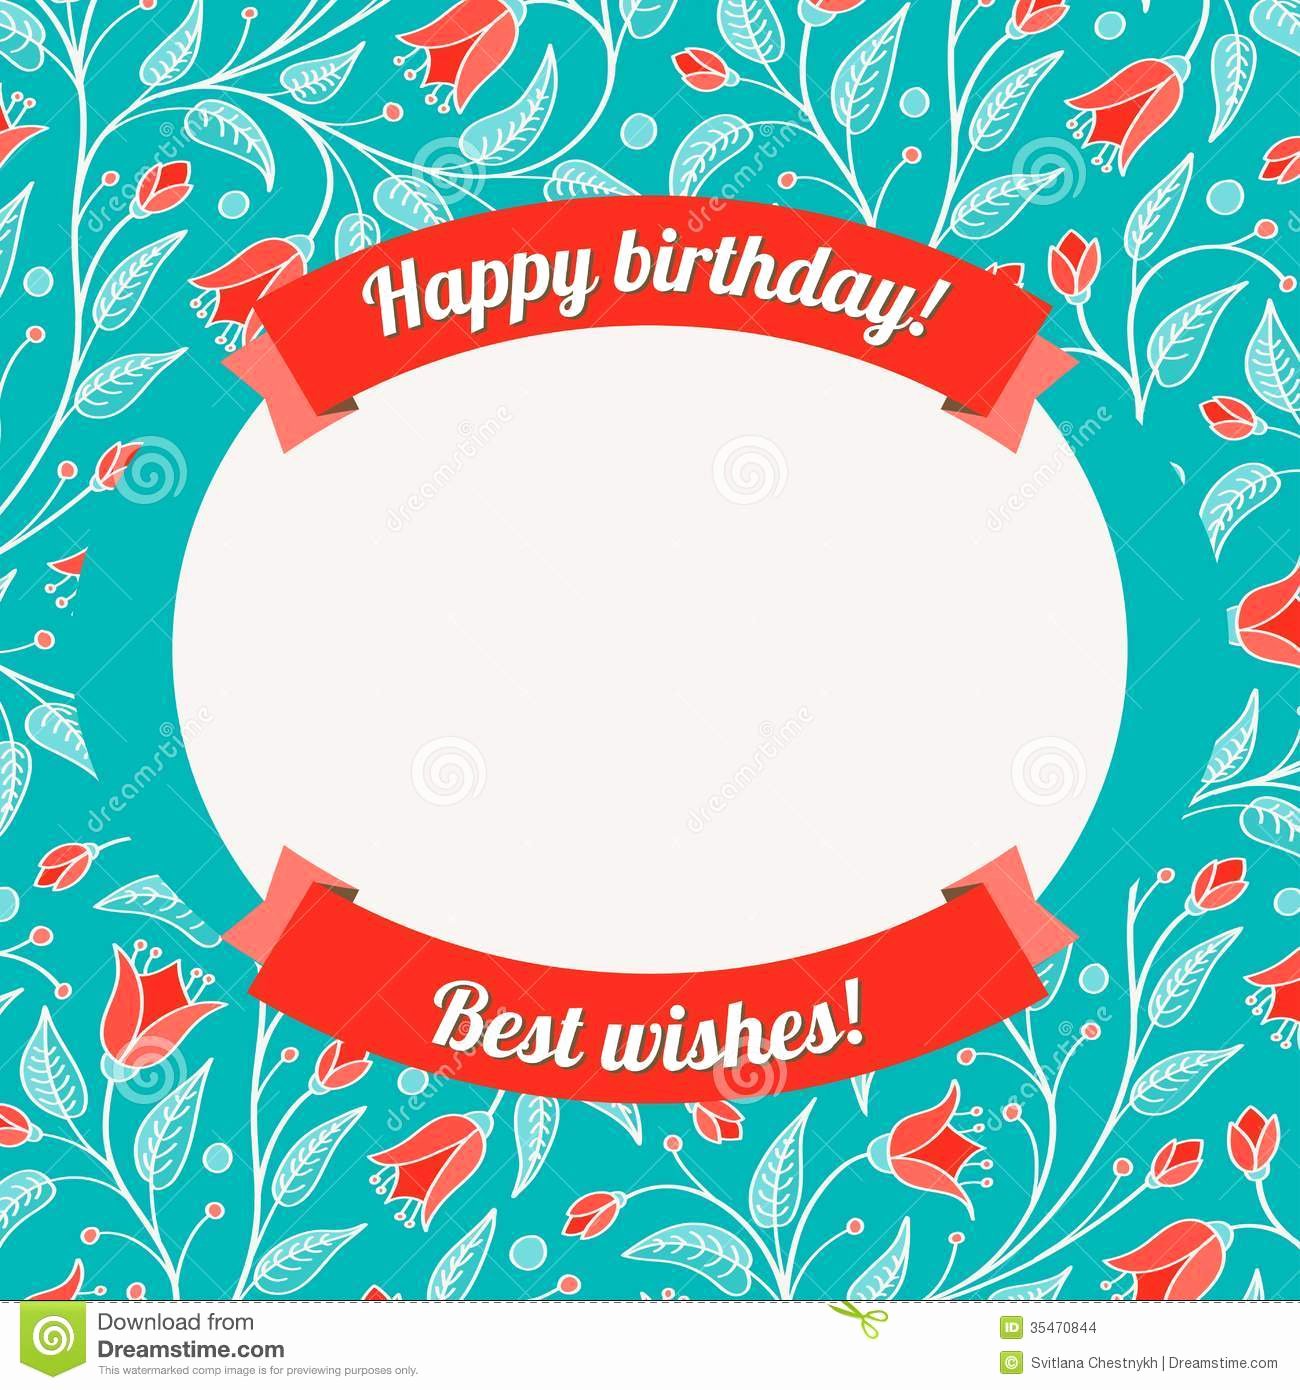 Free Birthday Card Templates Inspirational Birthday Card Template